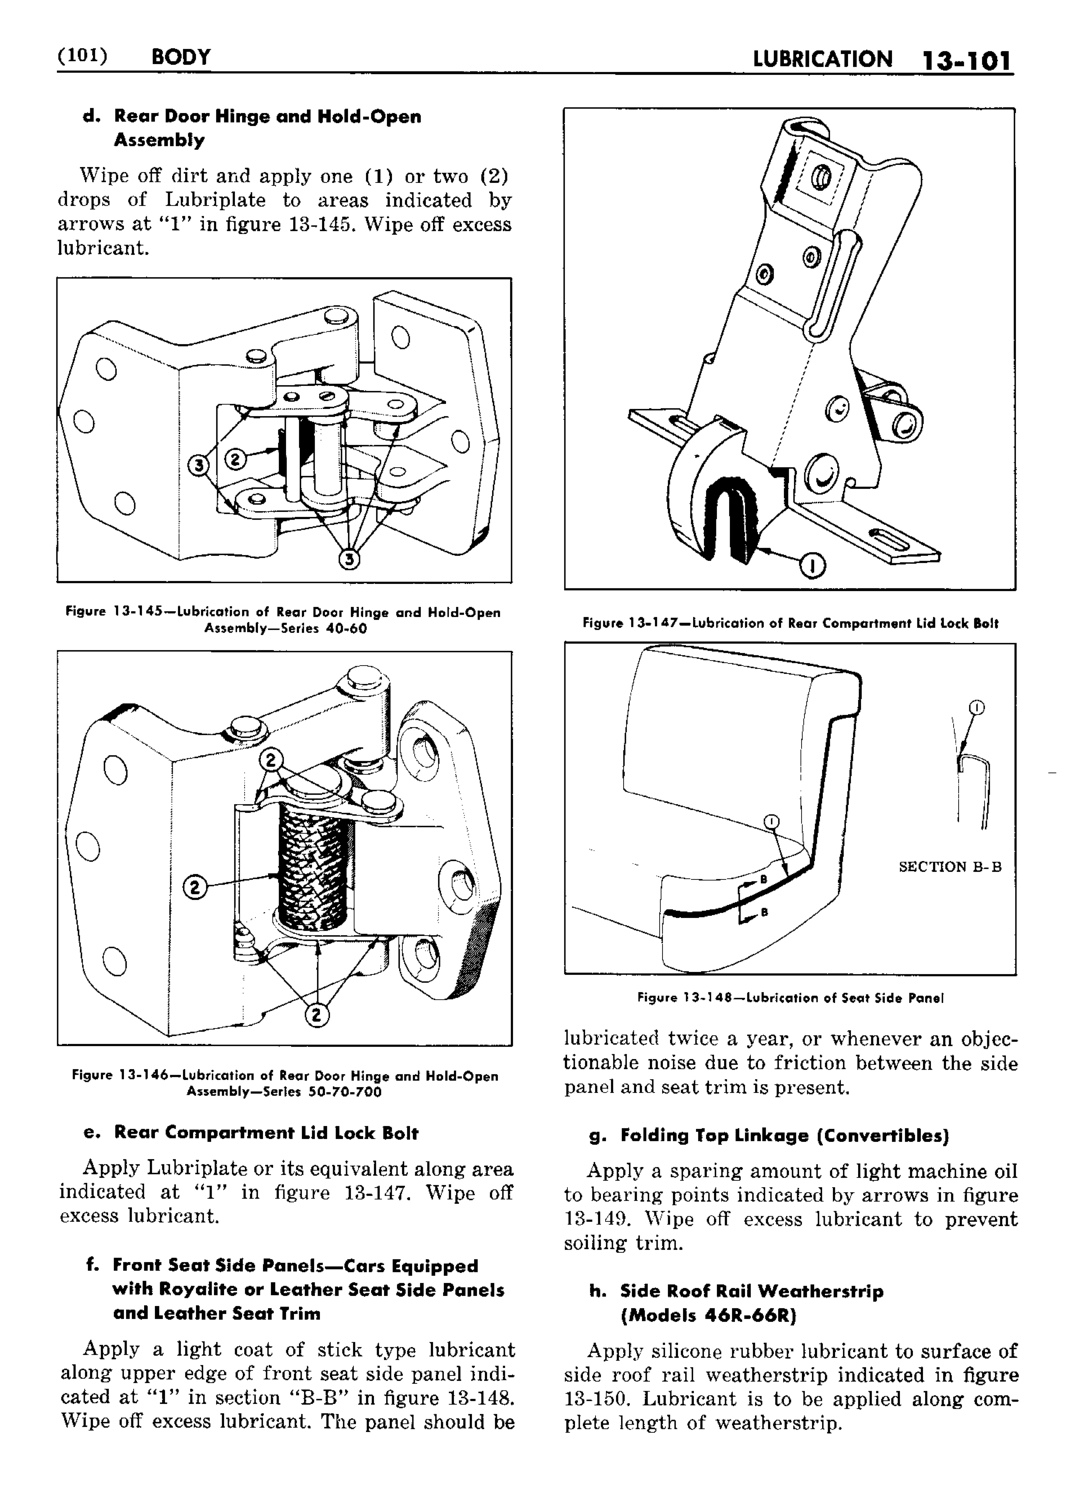 n_1958 Buick Body Service Manual-102-102.jpg